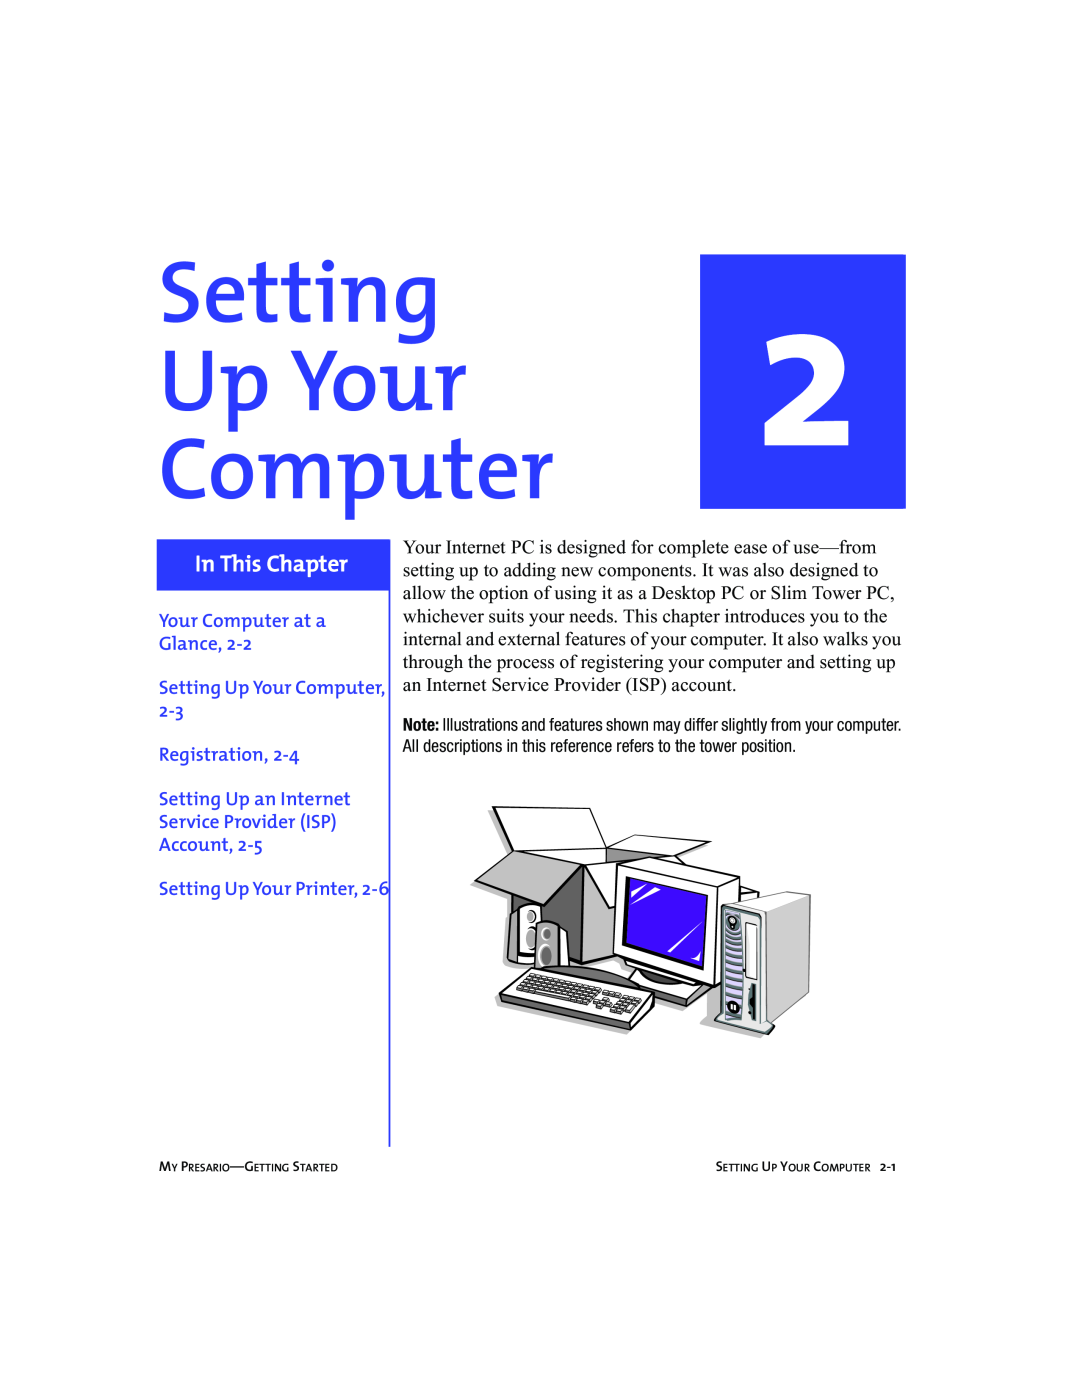 Compaq 5BW474 manual Your Computer at a Glance Setting Up Your Computer Registration, Setting Up Your Printer 